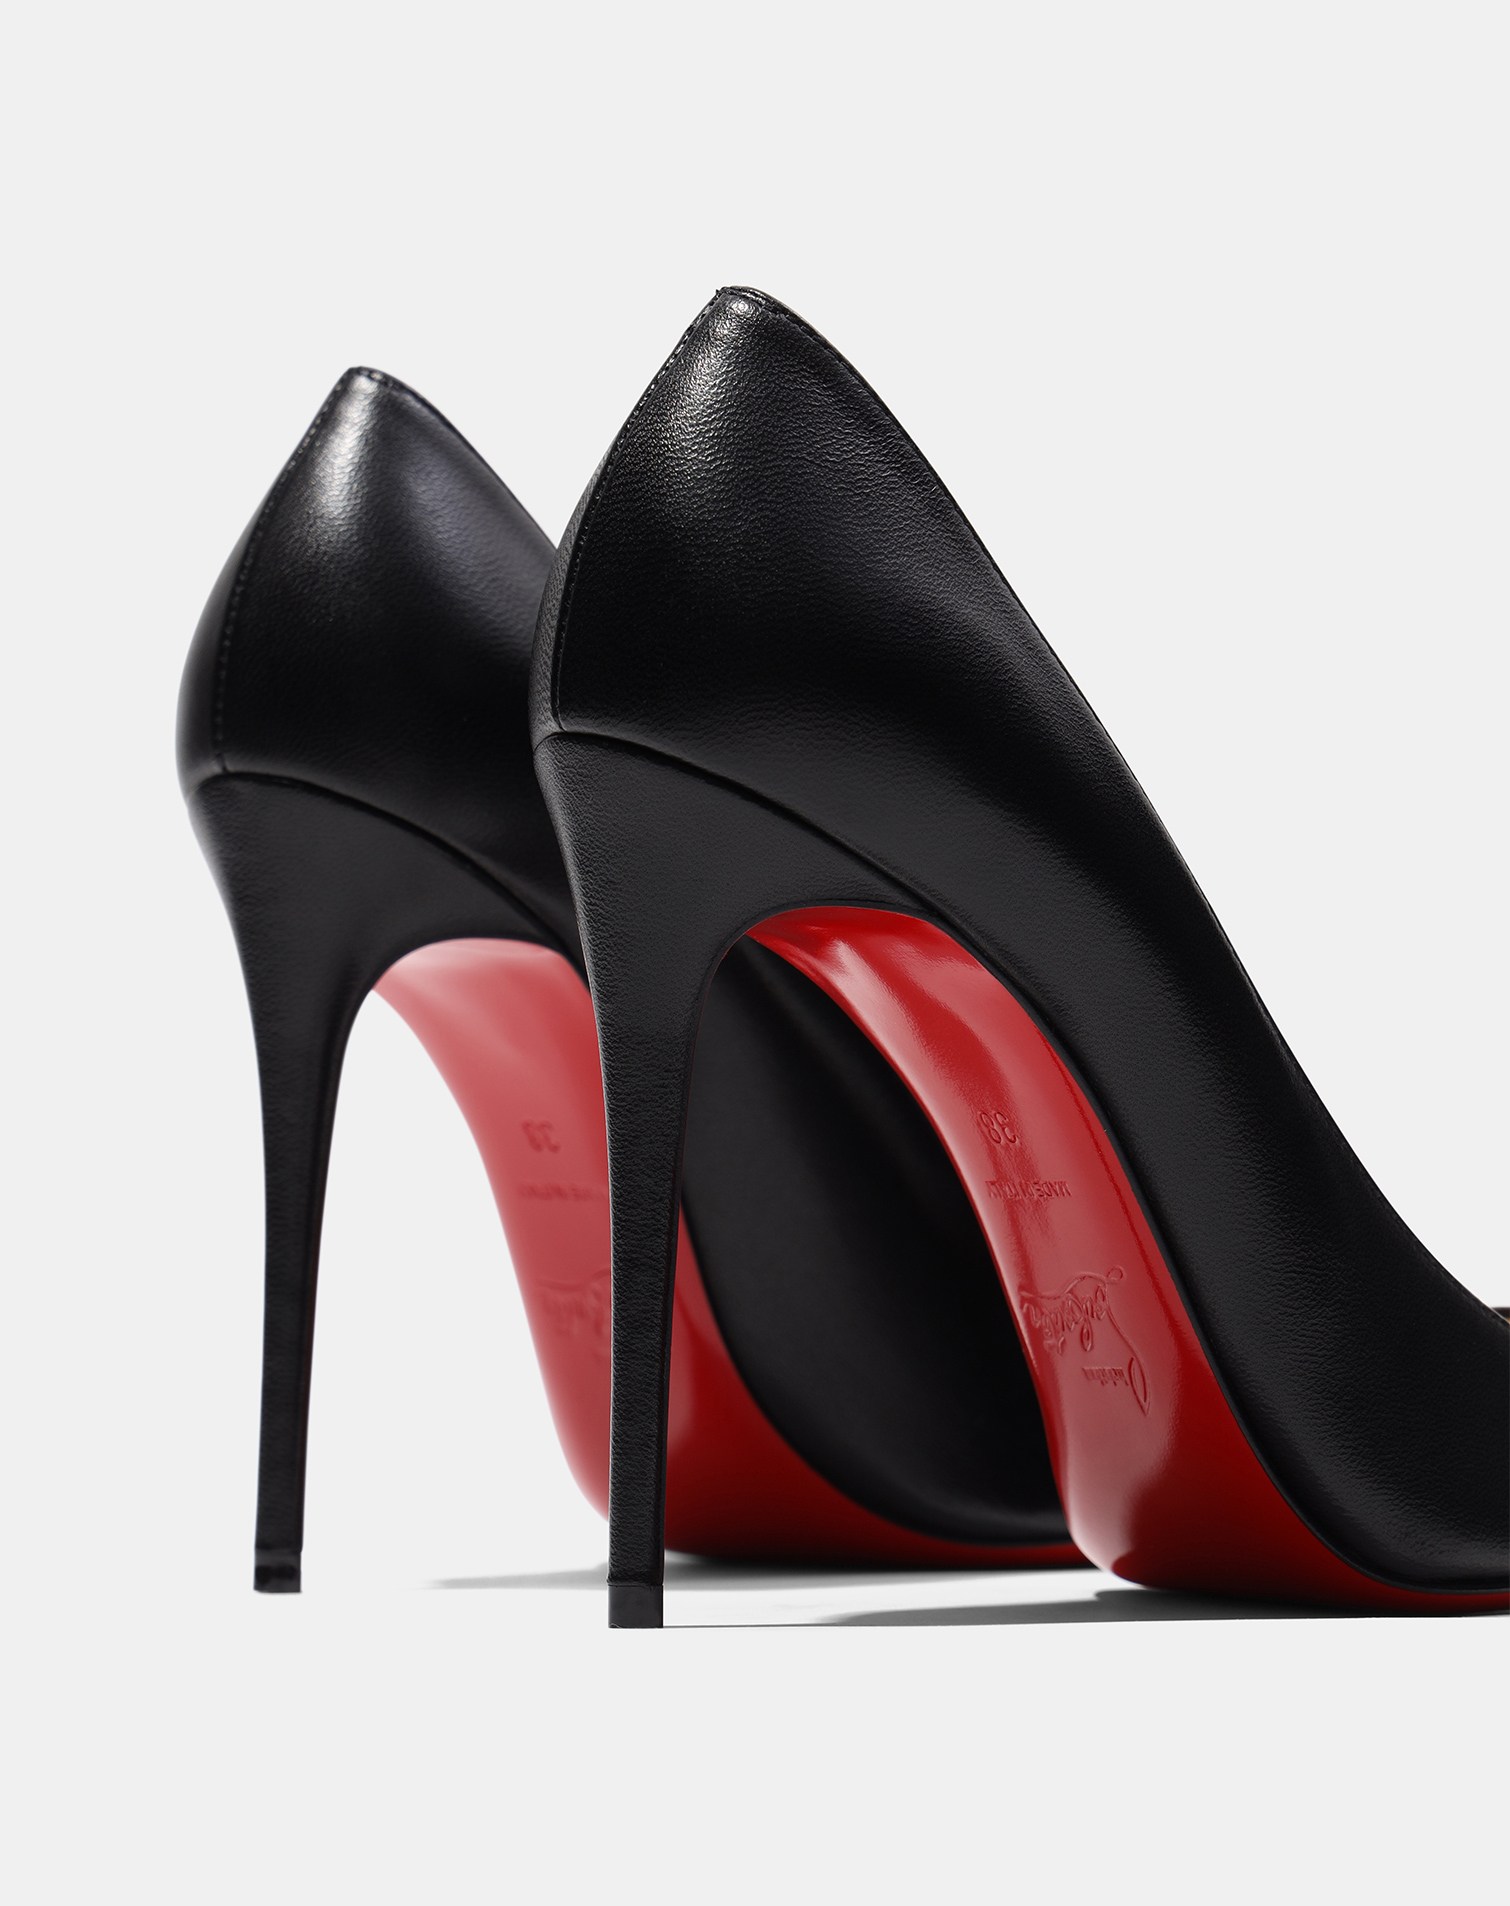 How To Make Christian Louboutin 'So Kate' Shoes Comfortable